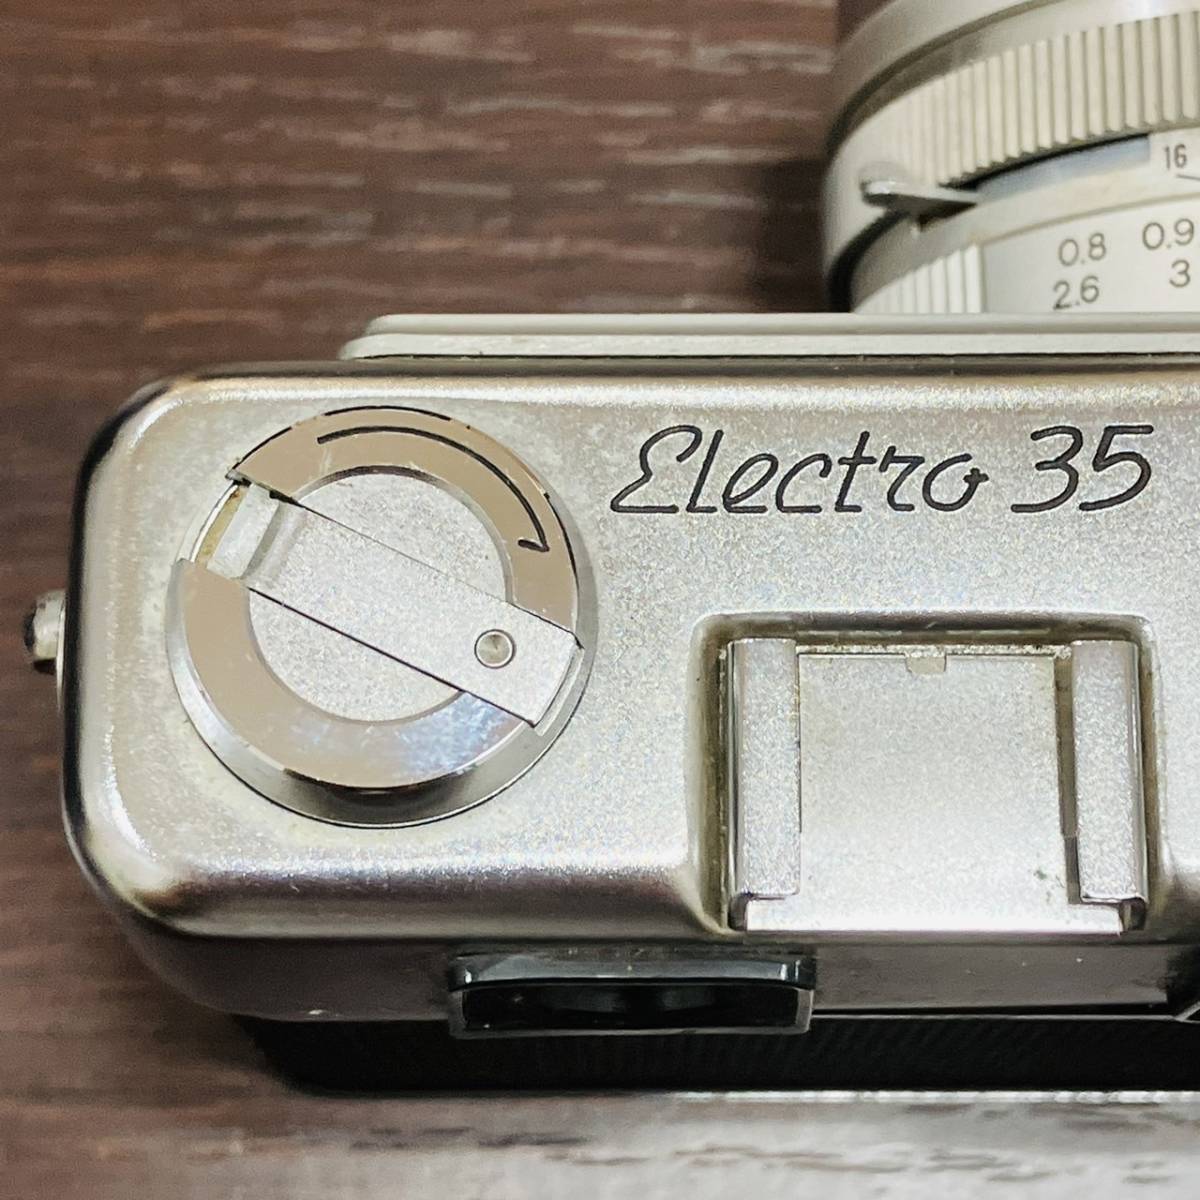 #4571*YASHICA ELECTRO35 Yashica электро 35 компакт-камера с футляром Japan f=45mm 1:1,7 YASHINON-DX работоспособность не проверялась * текущее состояние хранение товар 